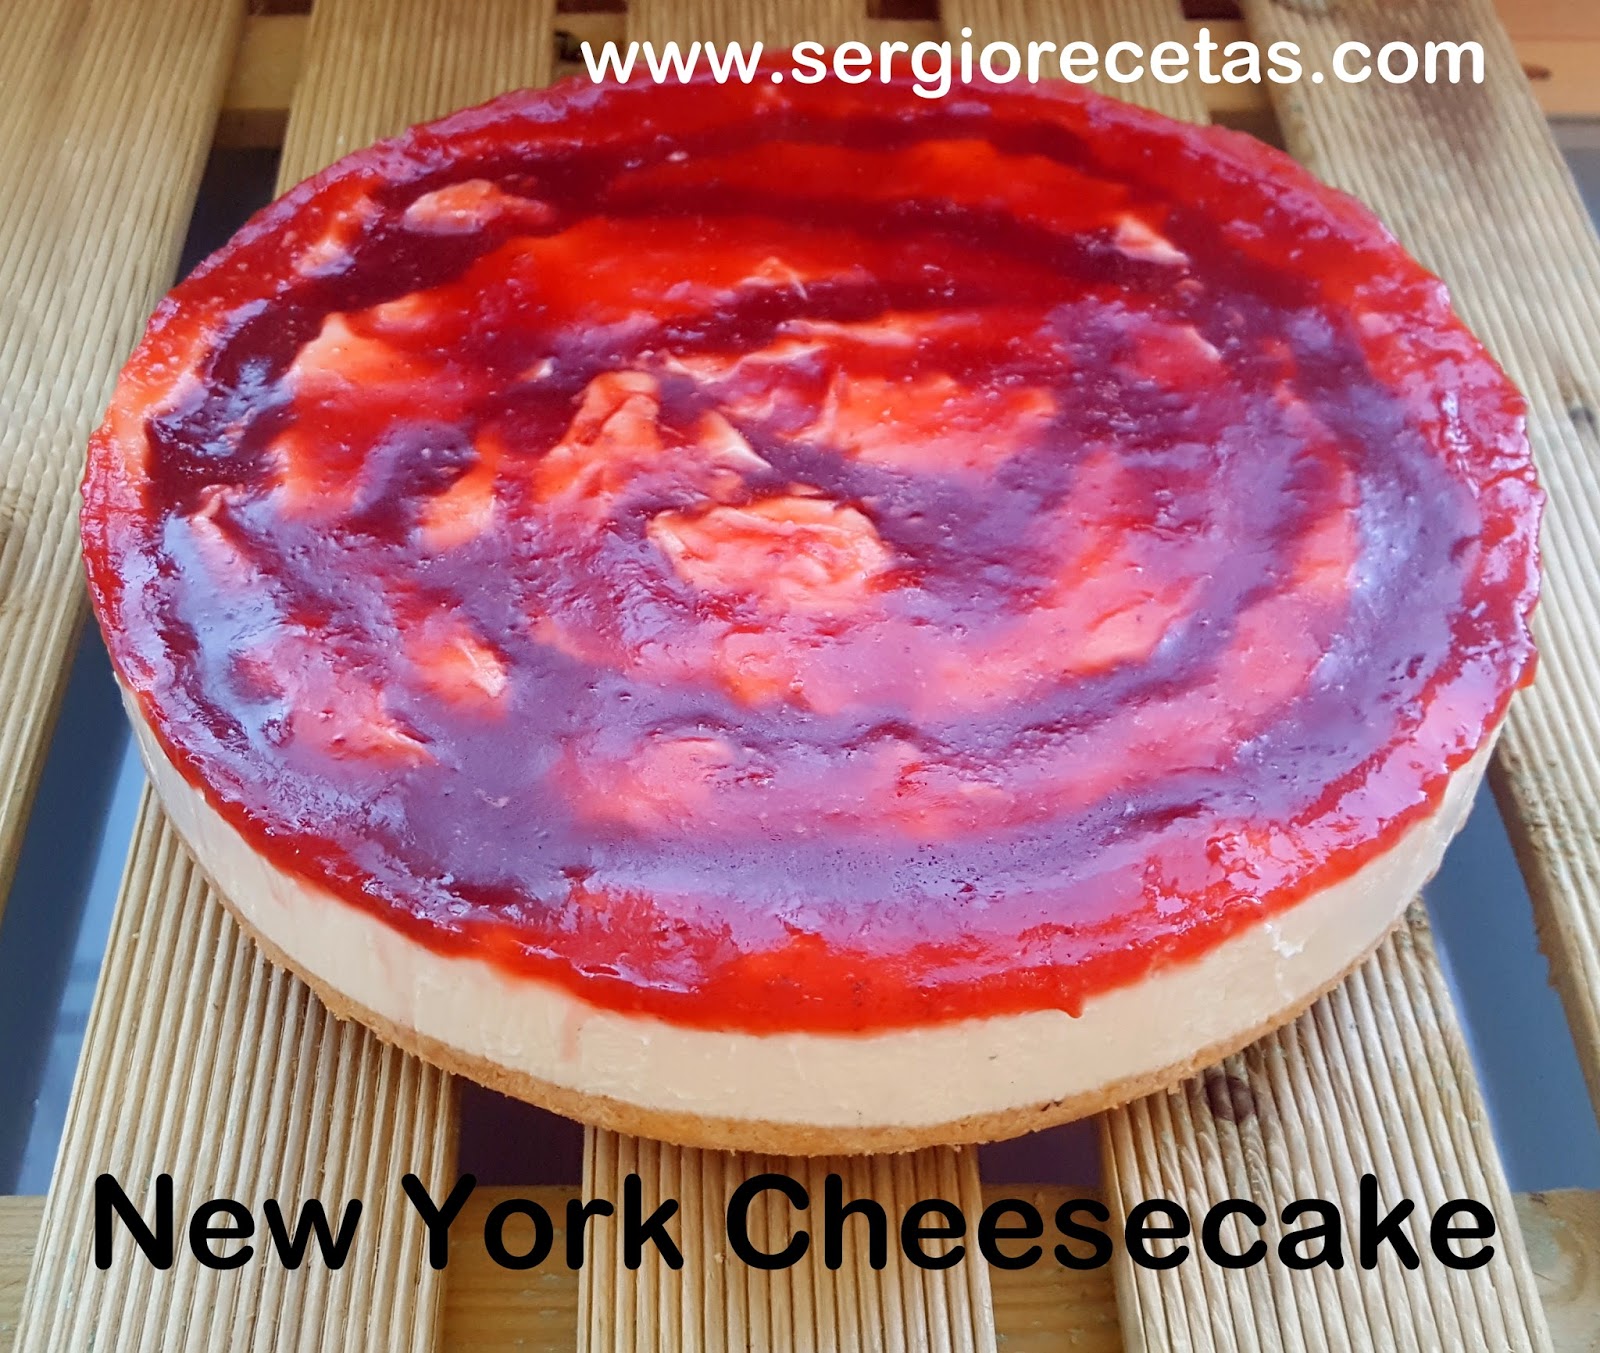 New York Cheesecake o Tarta de Queso al Estilo de Nueva York sin Horno/ Receta completa